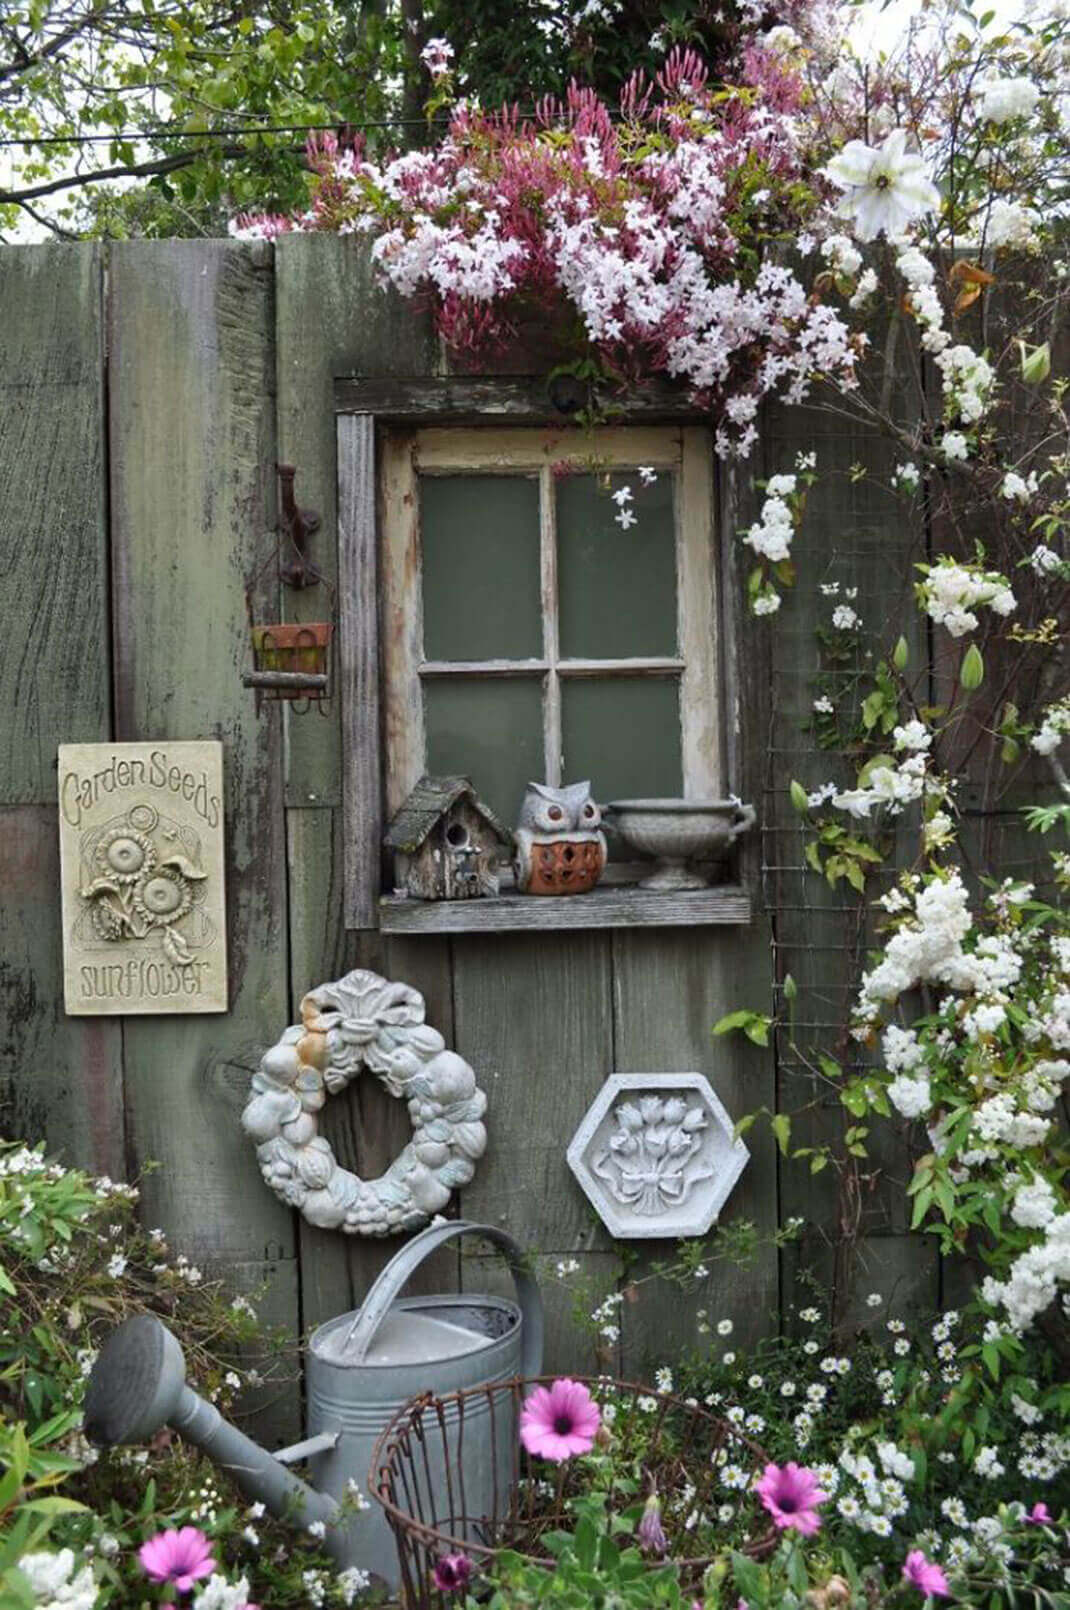 Garden Window Scene with Cute Owl Statue